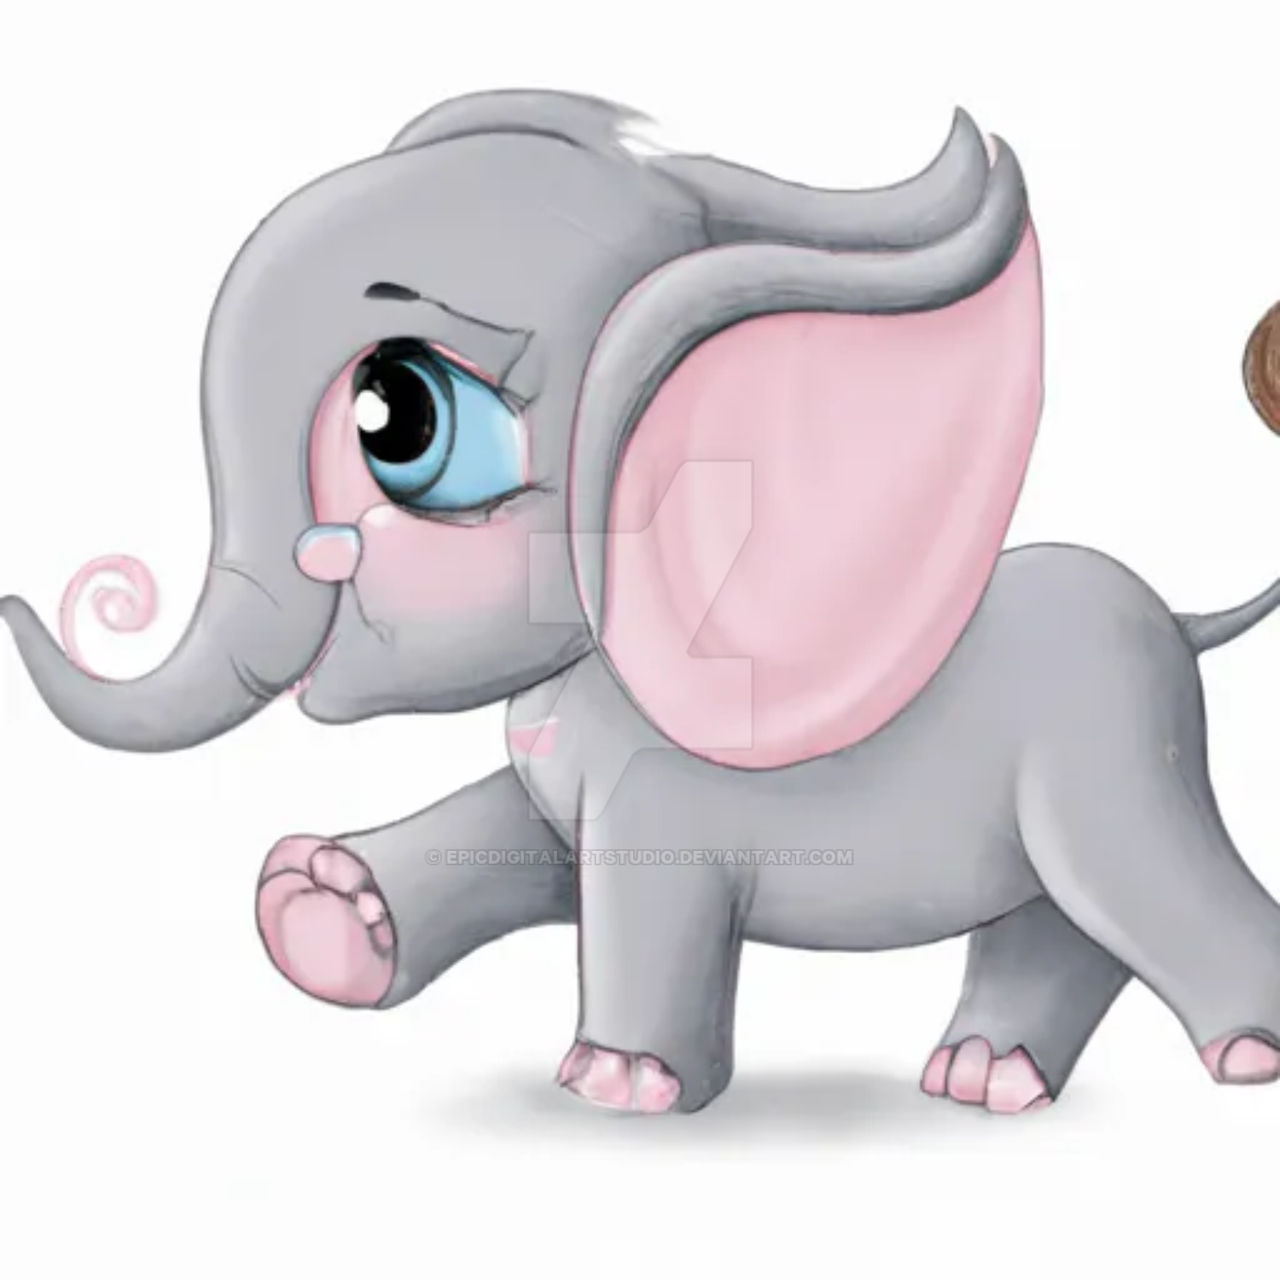 Gray And Pink Baby Elephant Walking by EpicDigitalArtStudio on DeviantArt